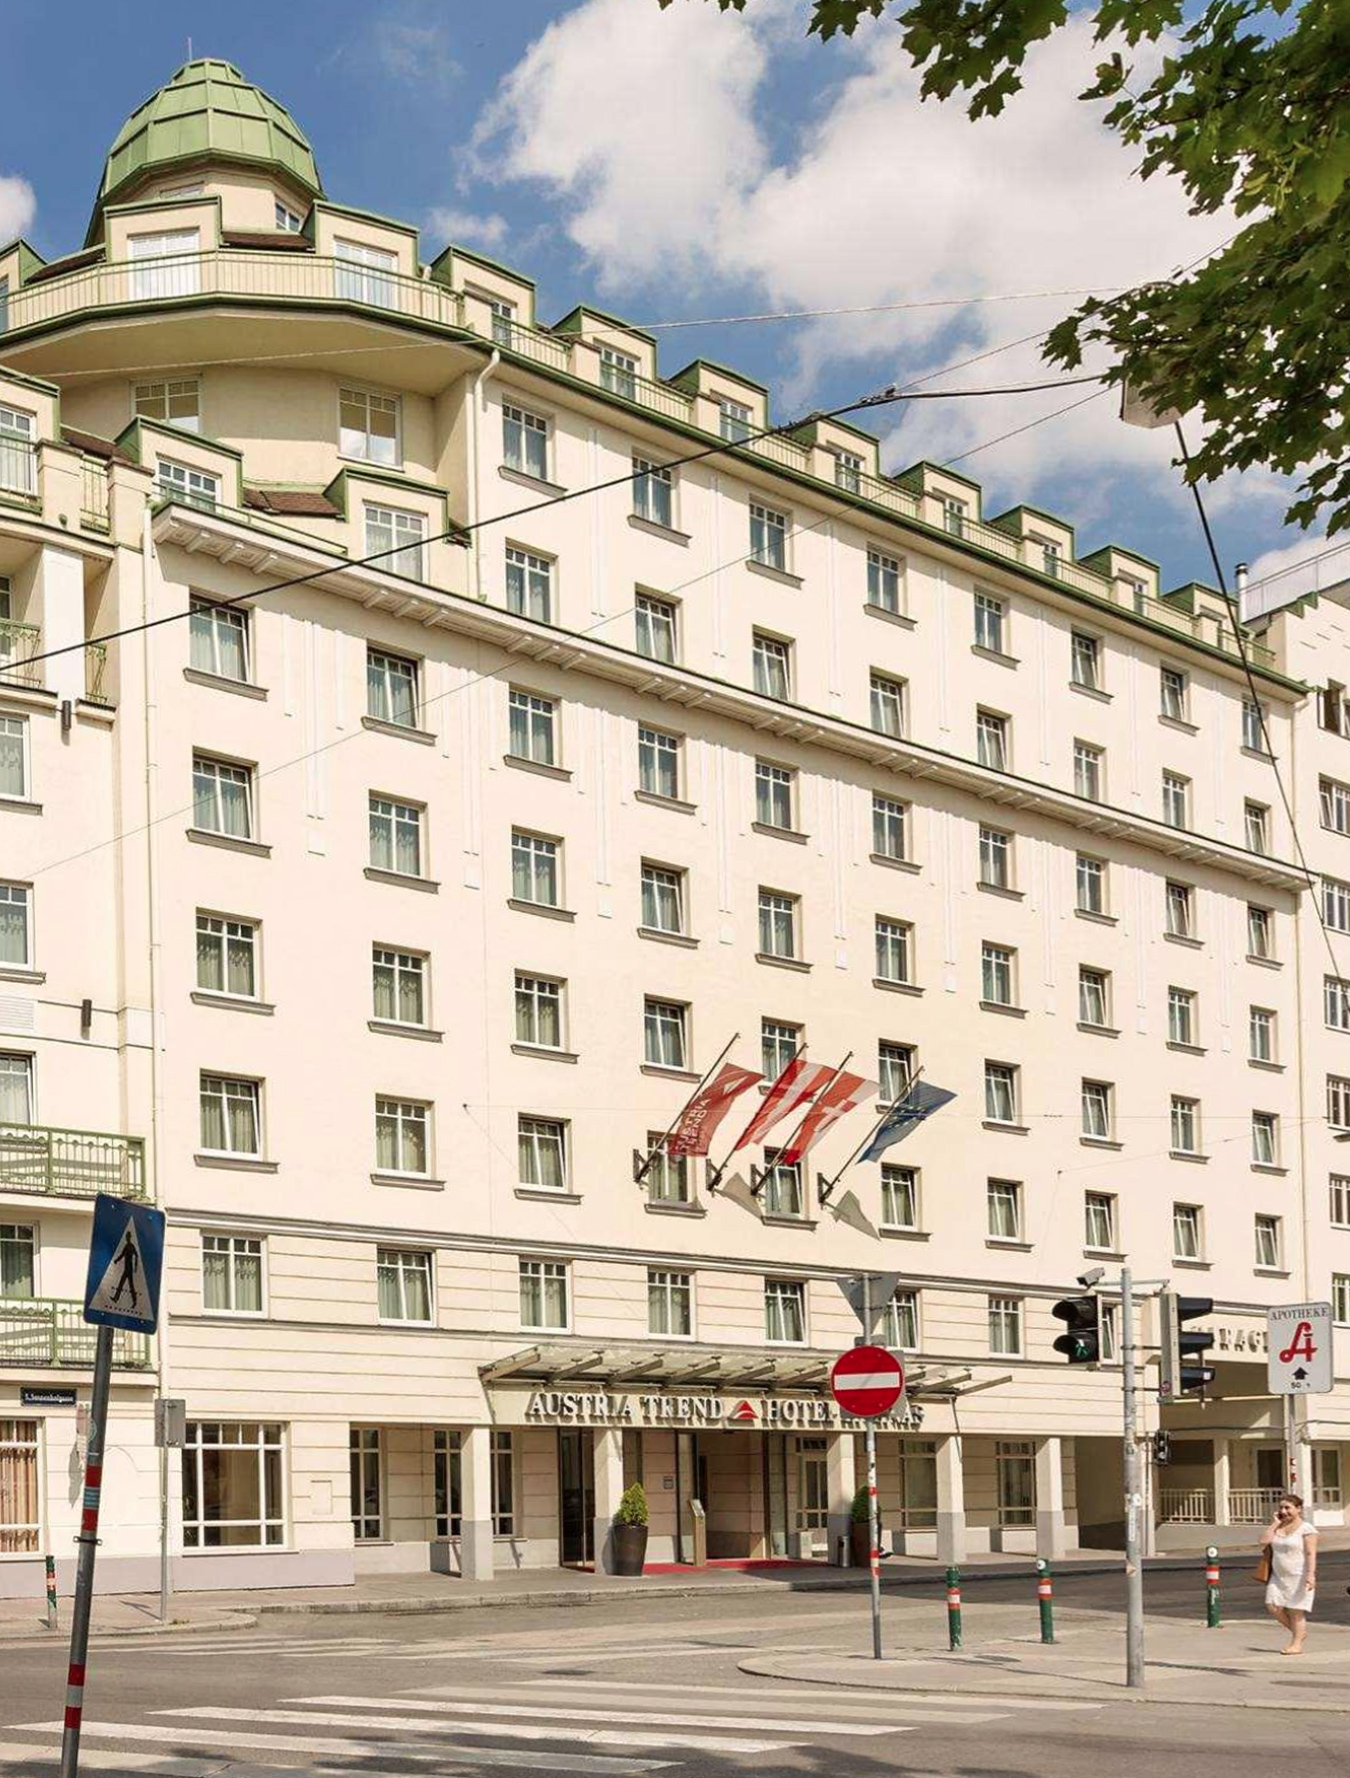 Wien - Austria Trend Hotel Ananas